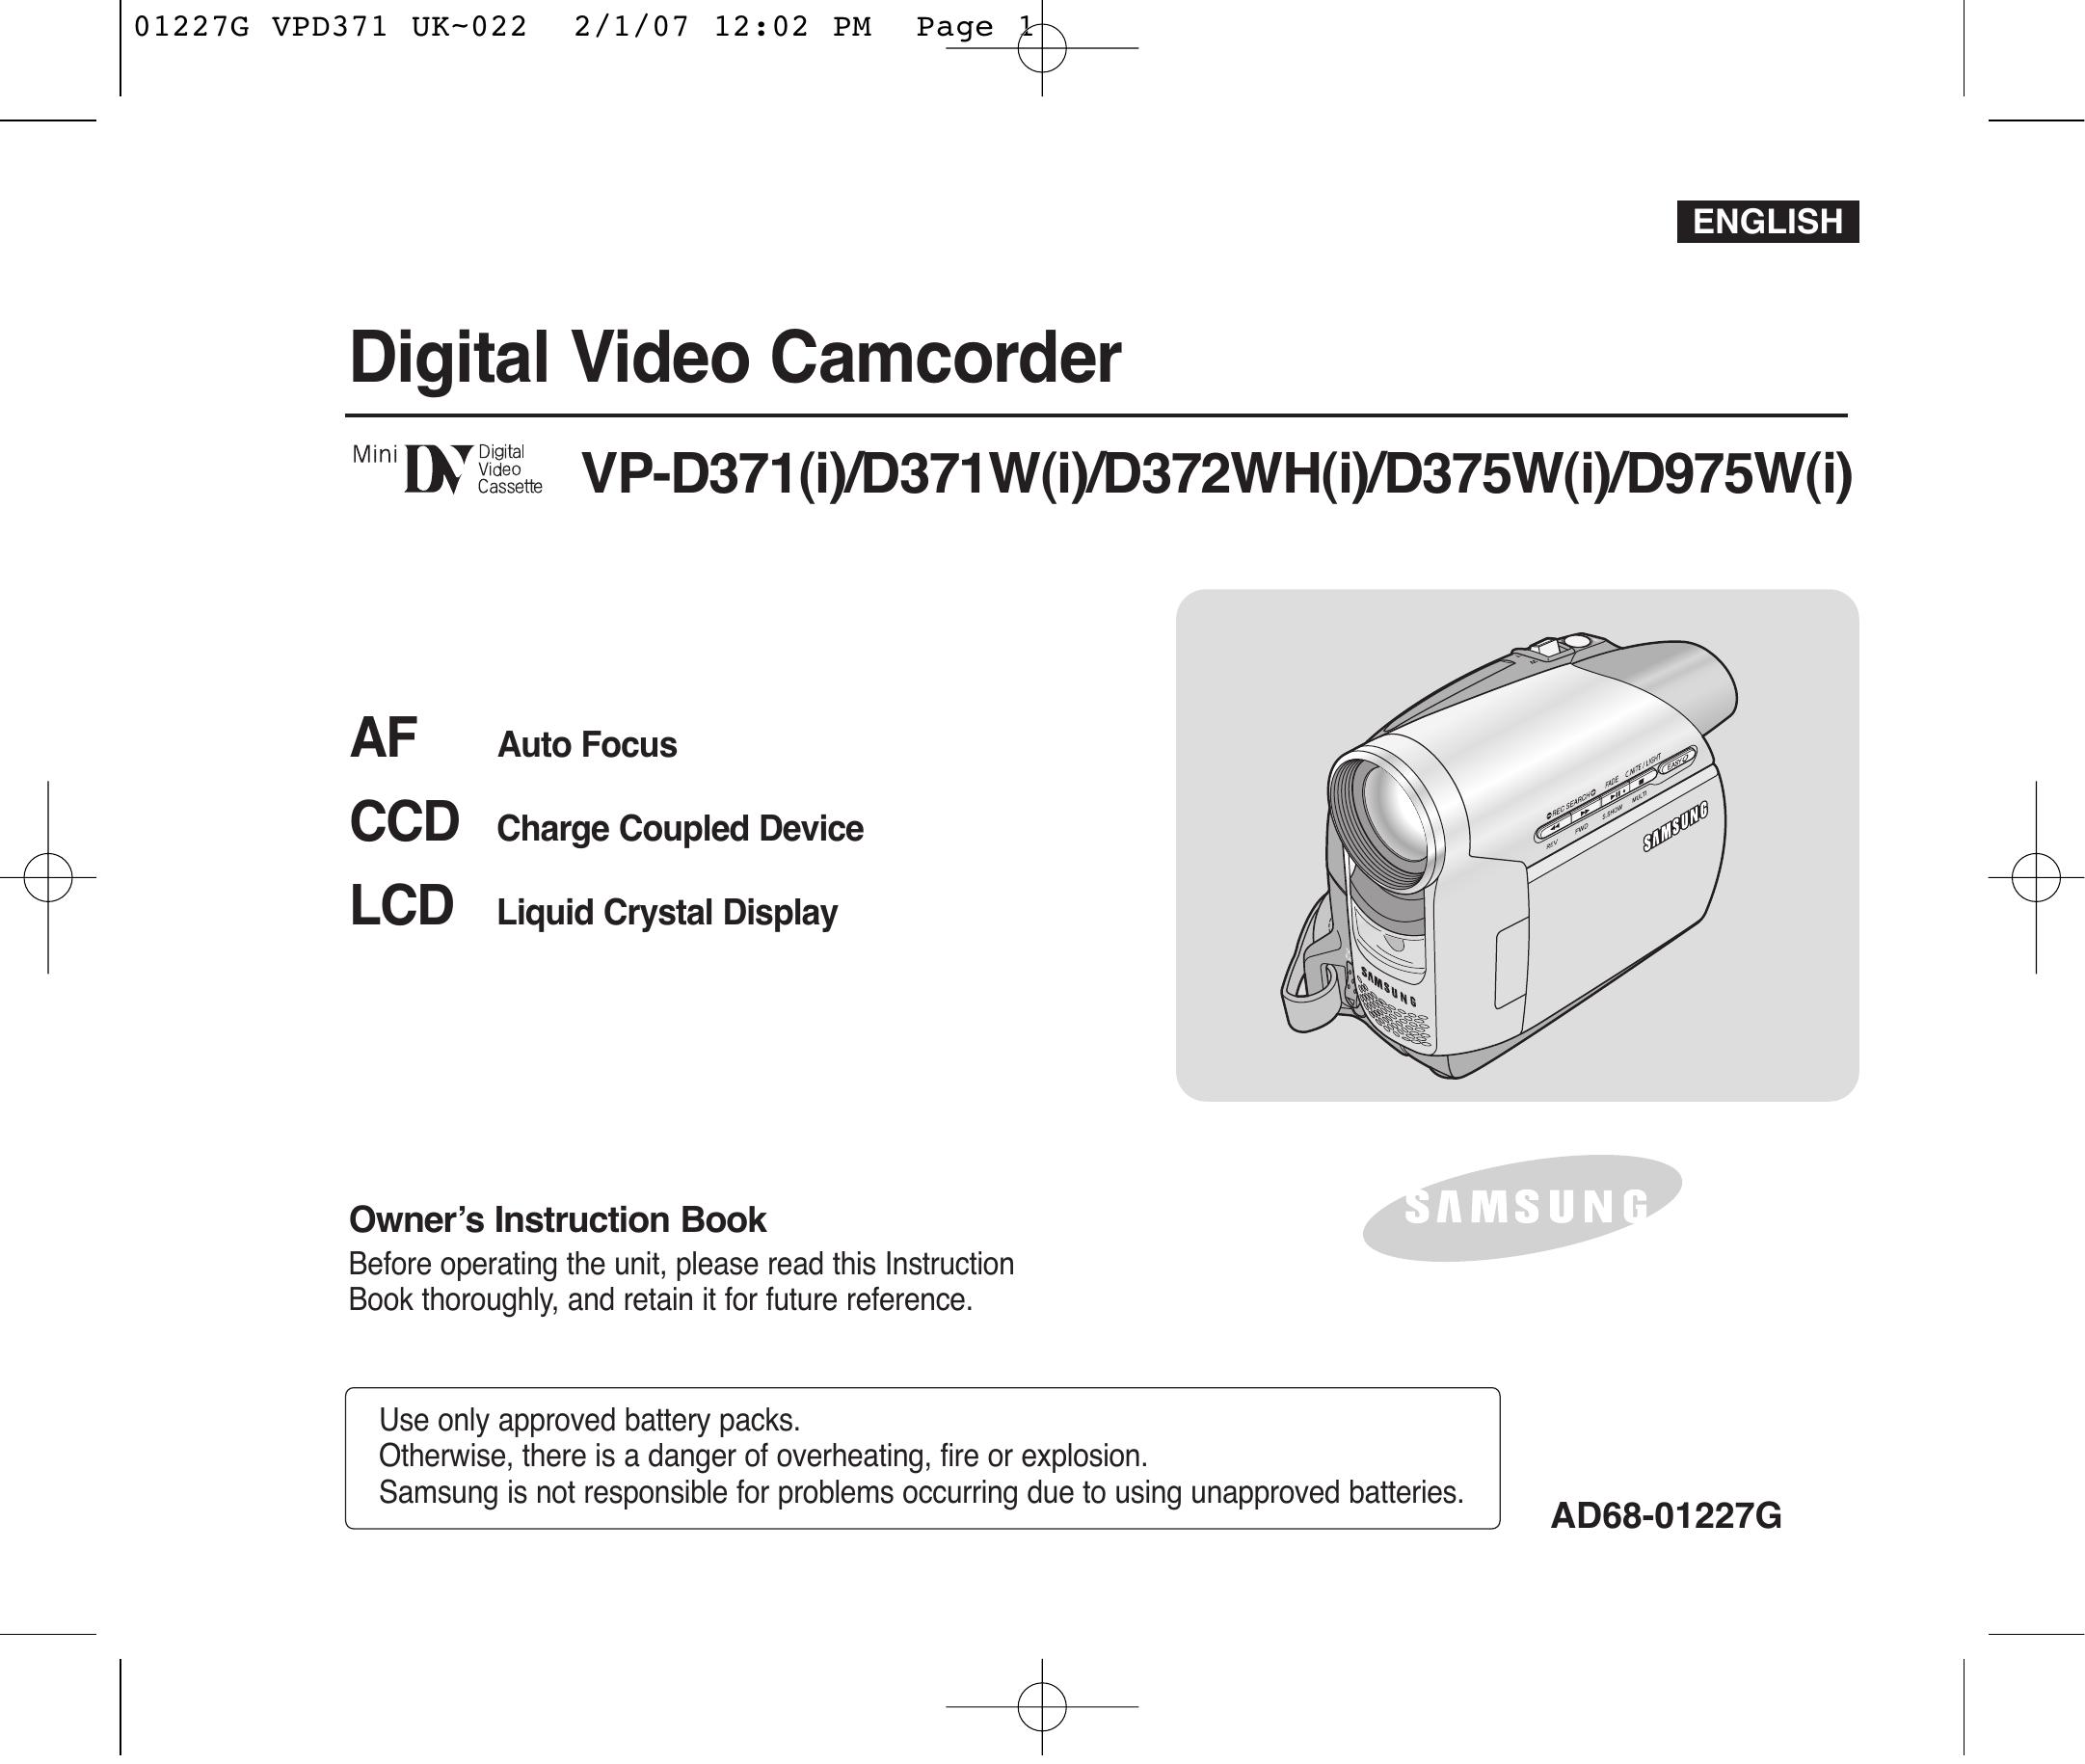 Samsung D371W(i) Camcorder User Manual